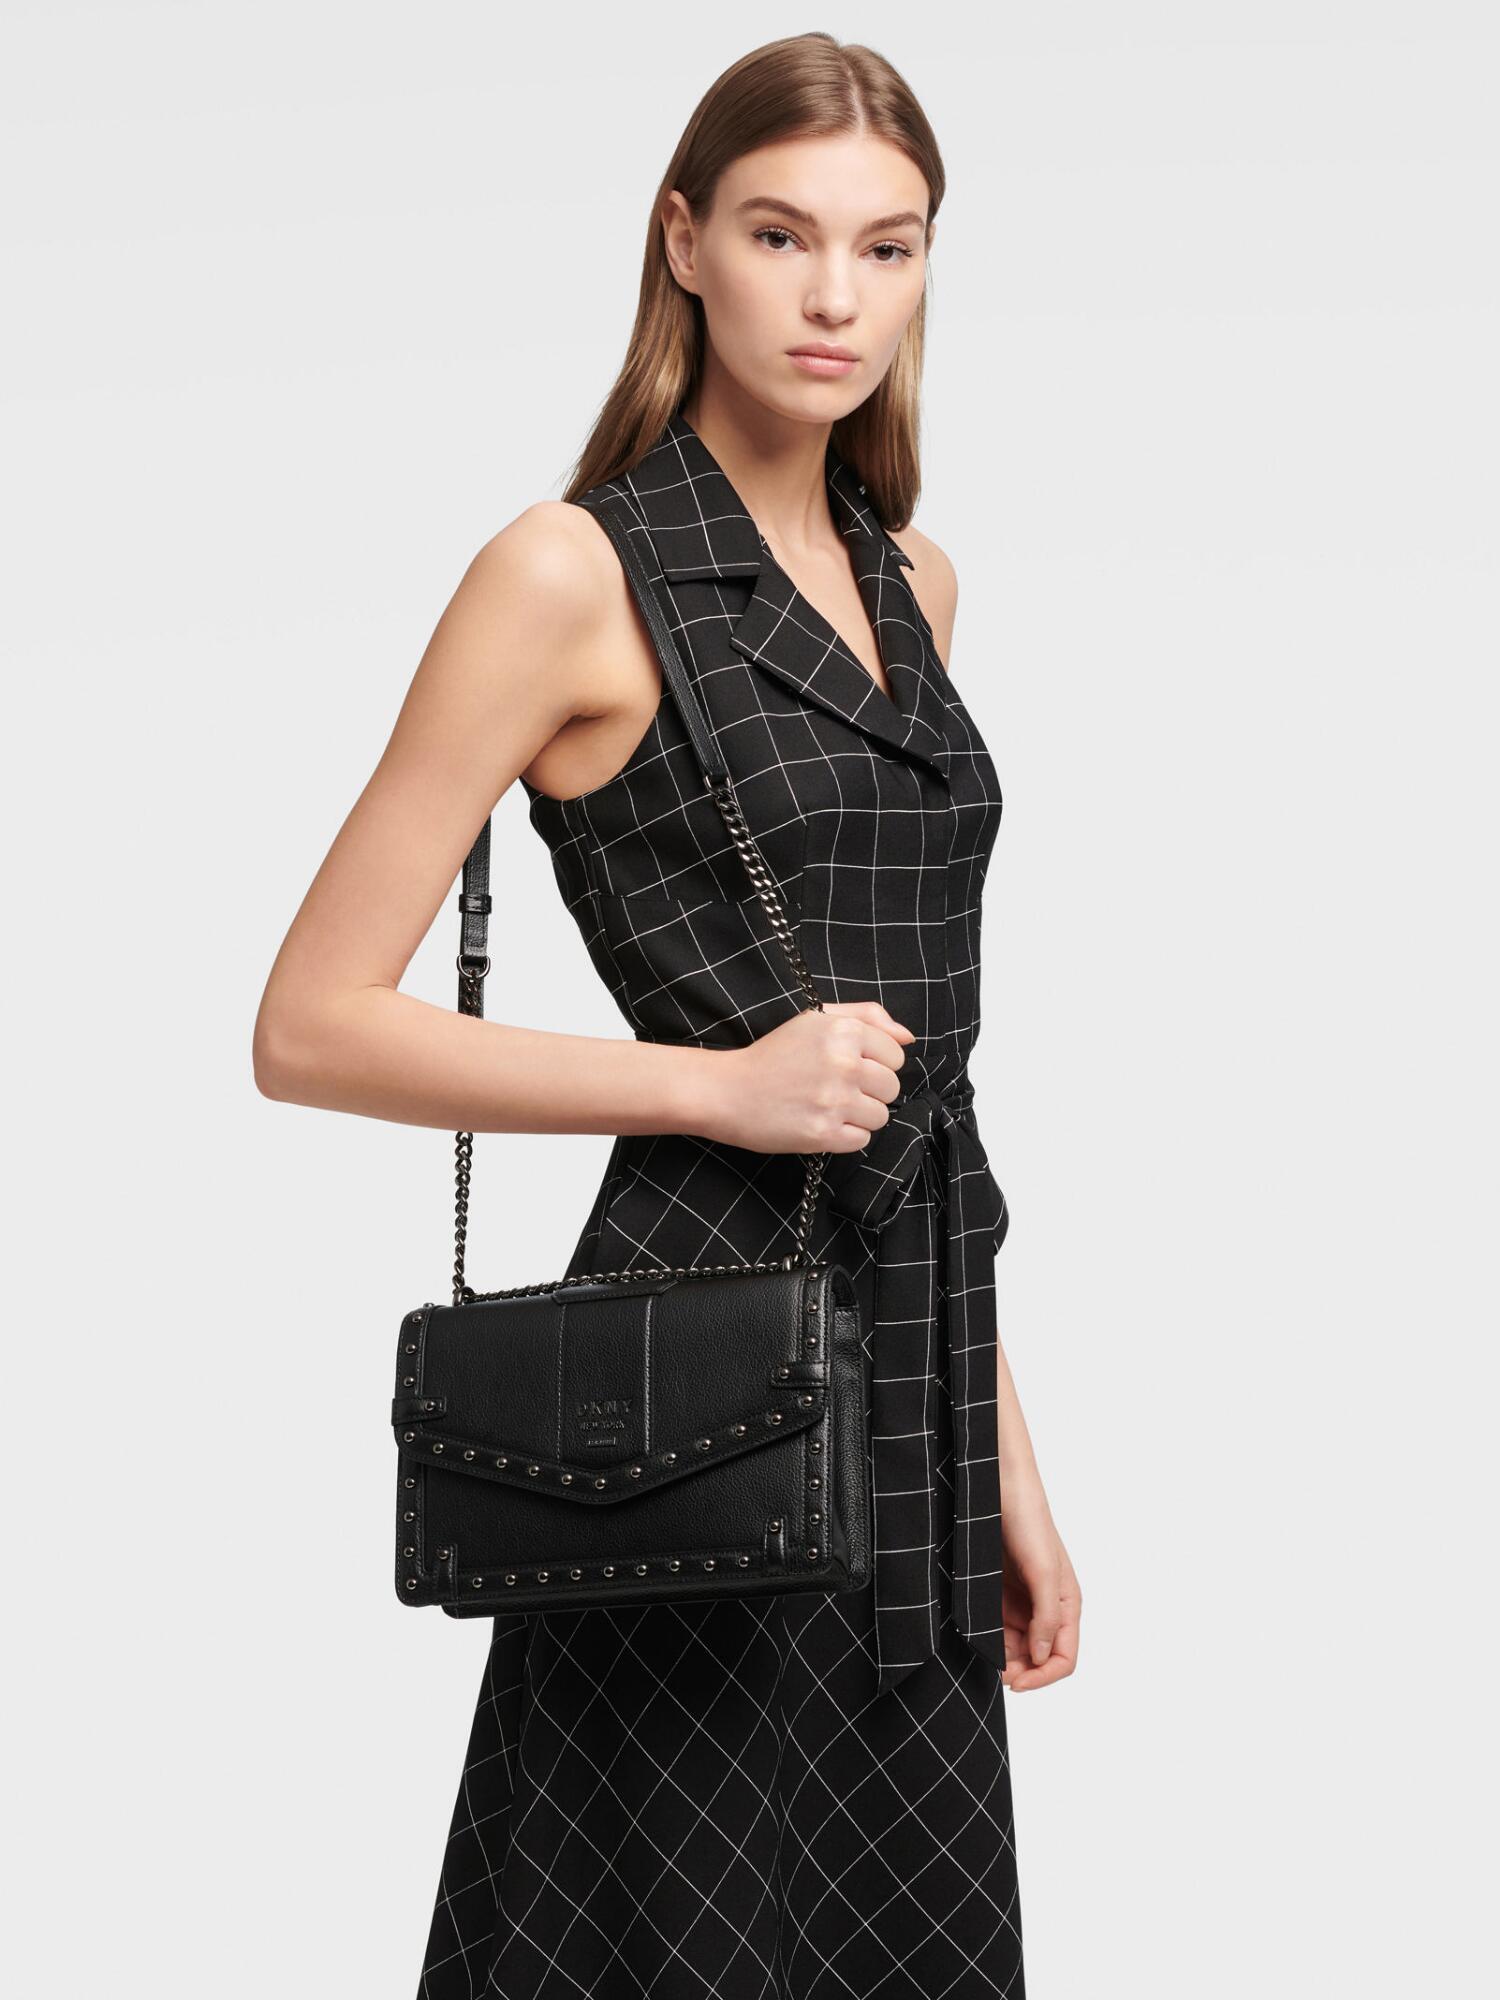 DKNY Whitney Studded Shoulder Bag in Black - Lyst